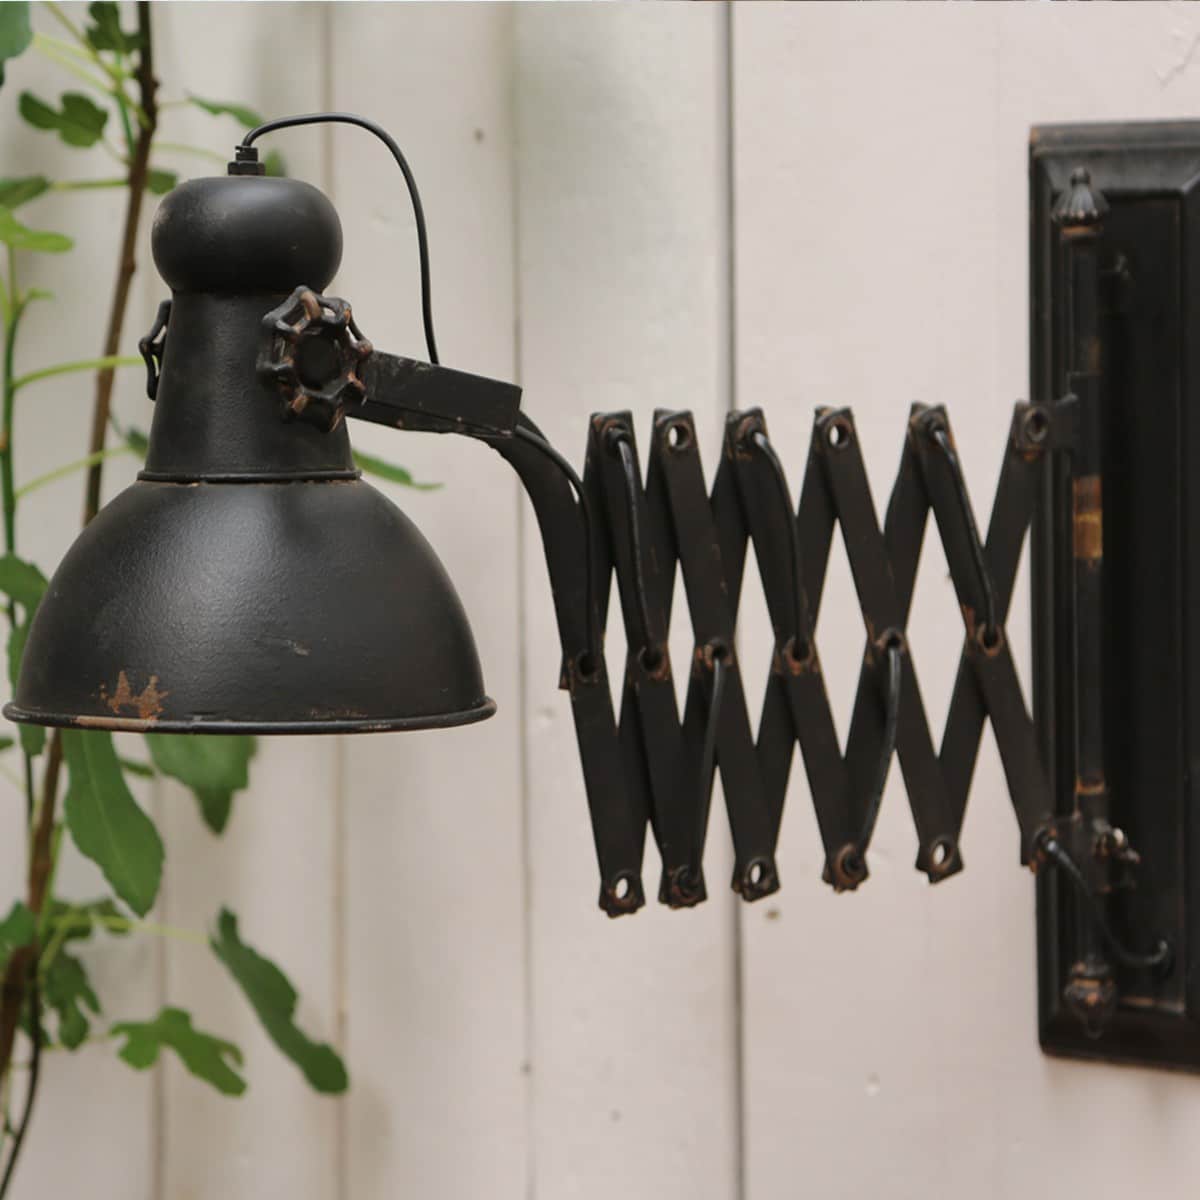 Vägglampa Factory utdragbar arm vintage fransk lantstil